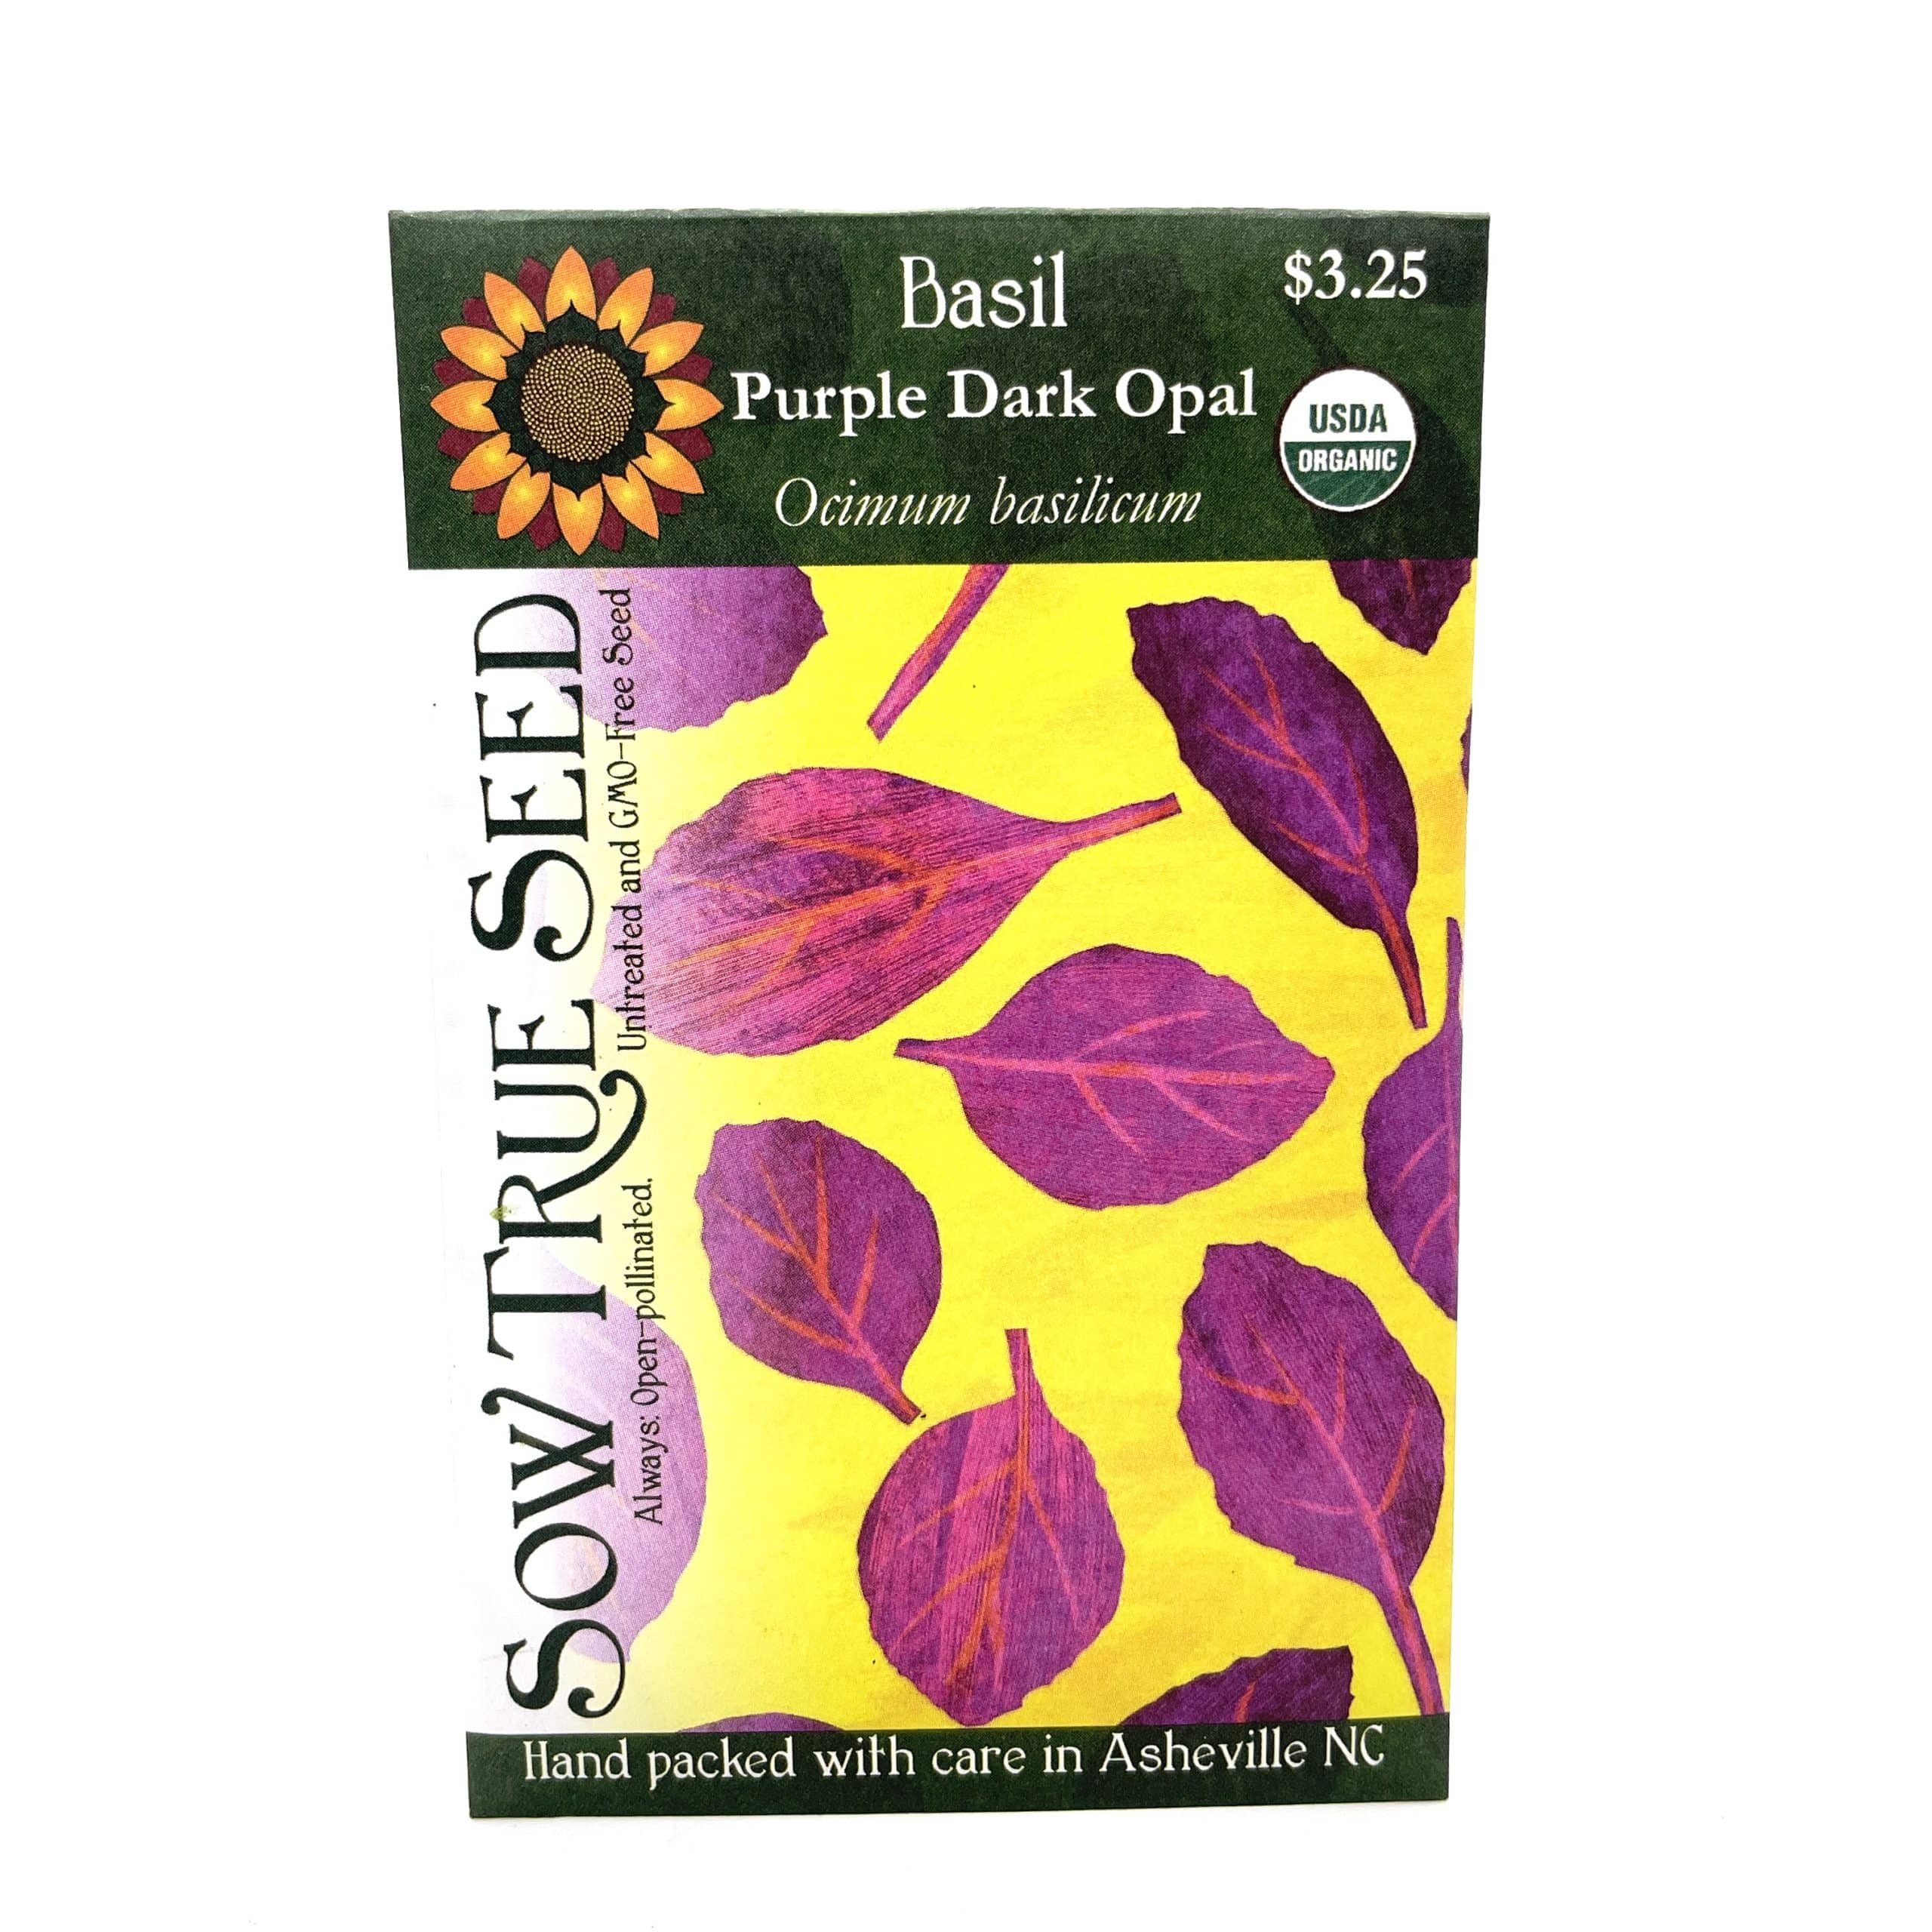 Purple Dark Opal Basil